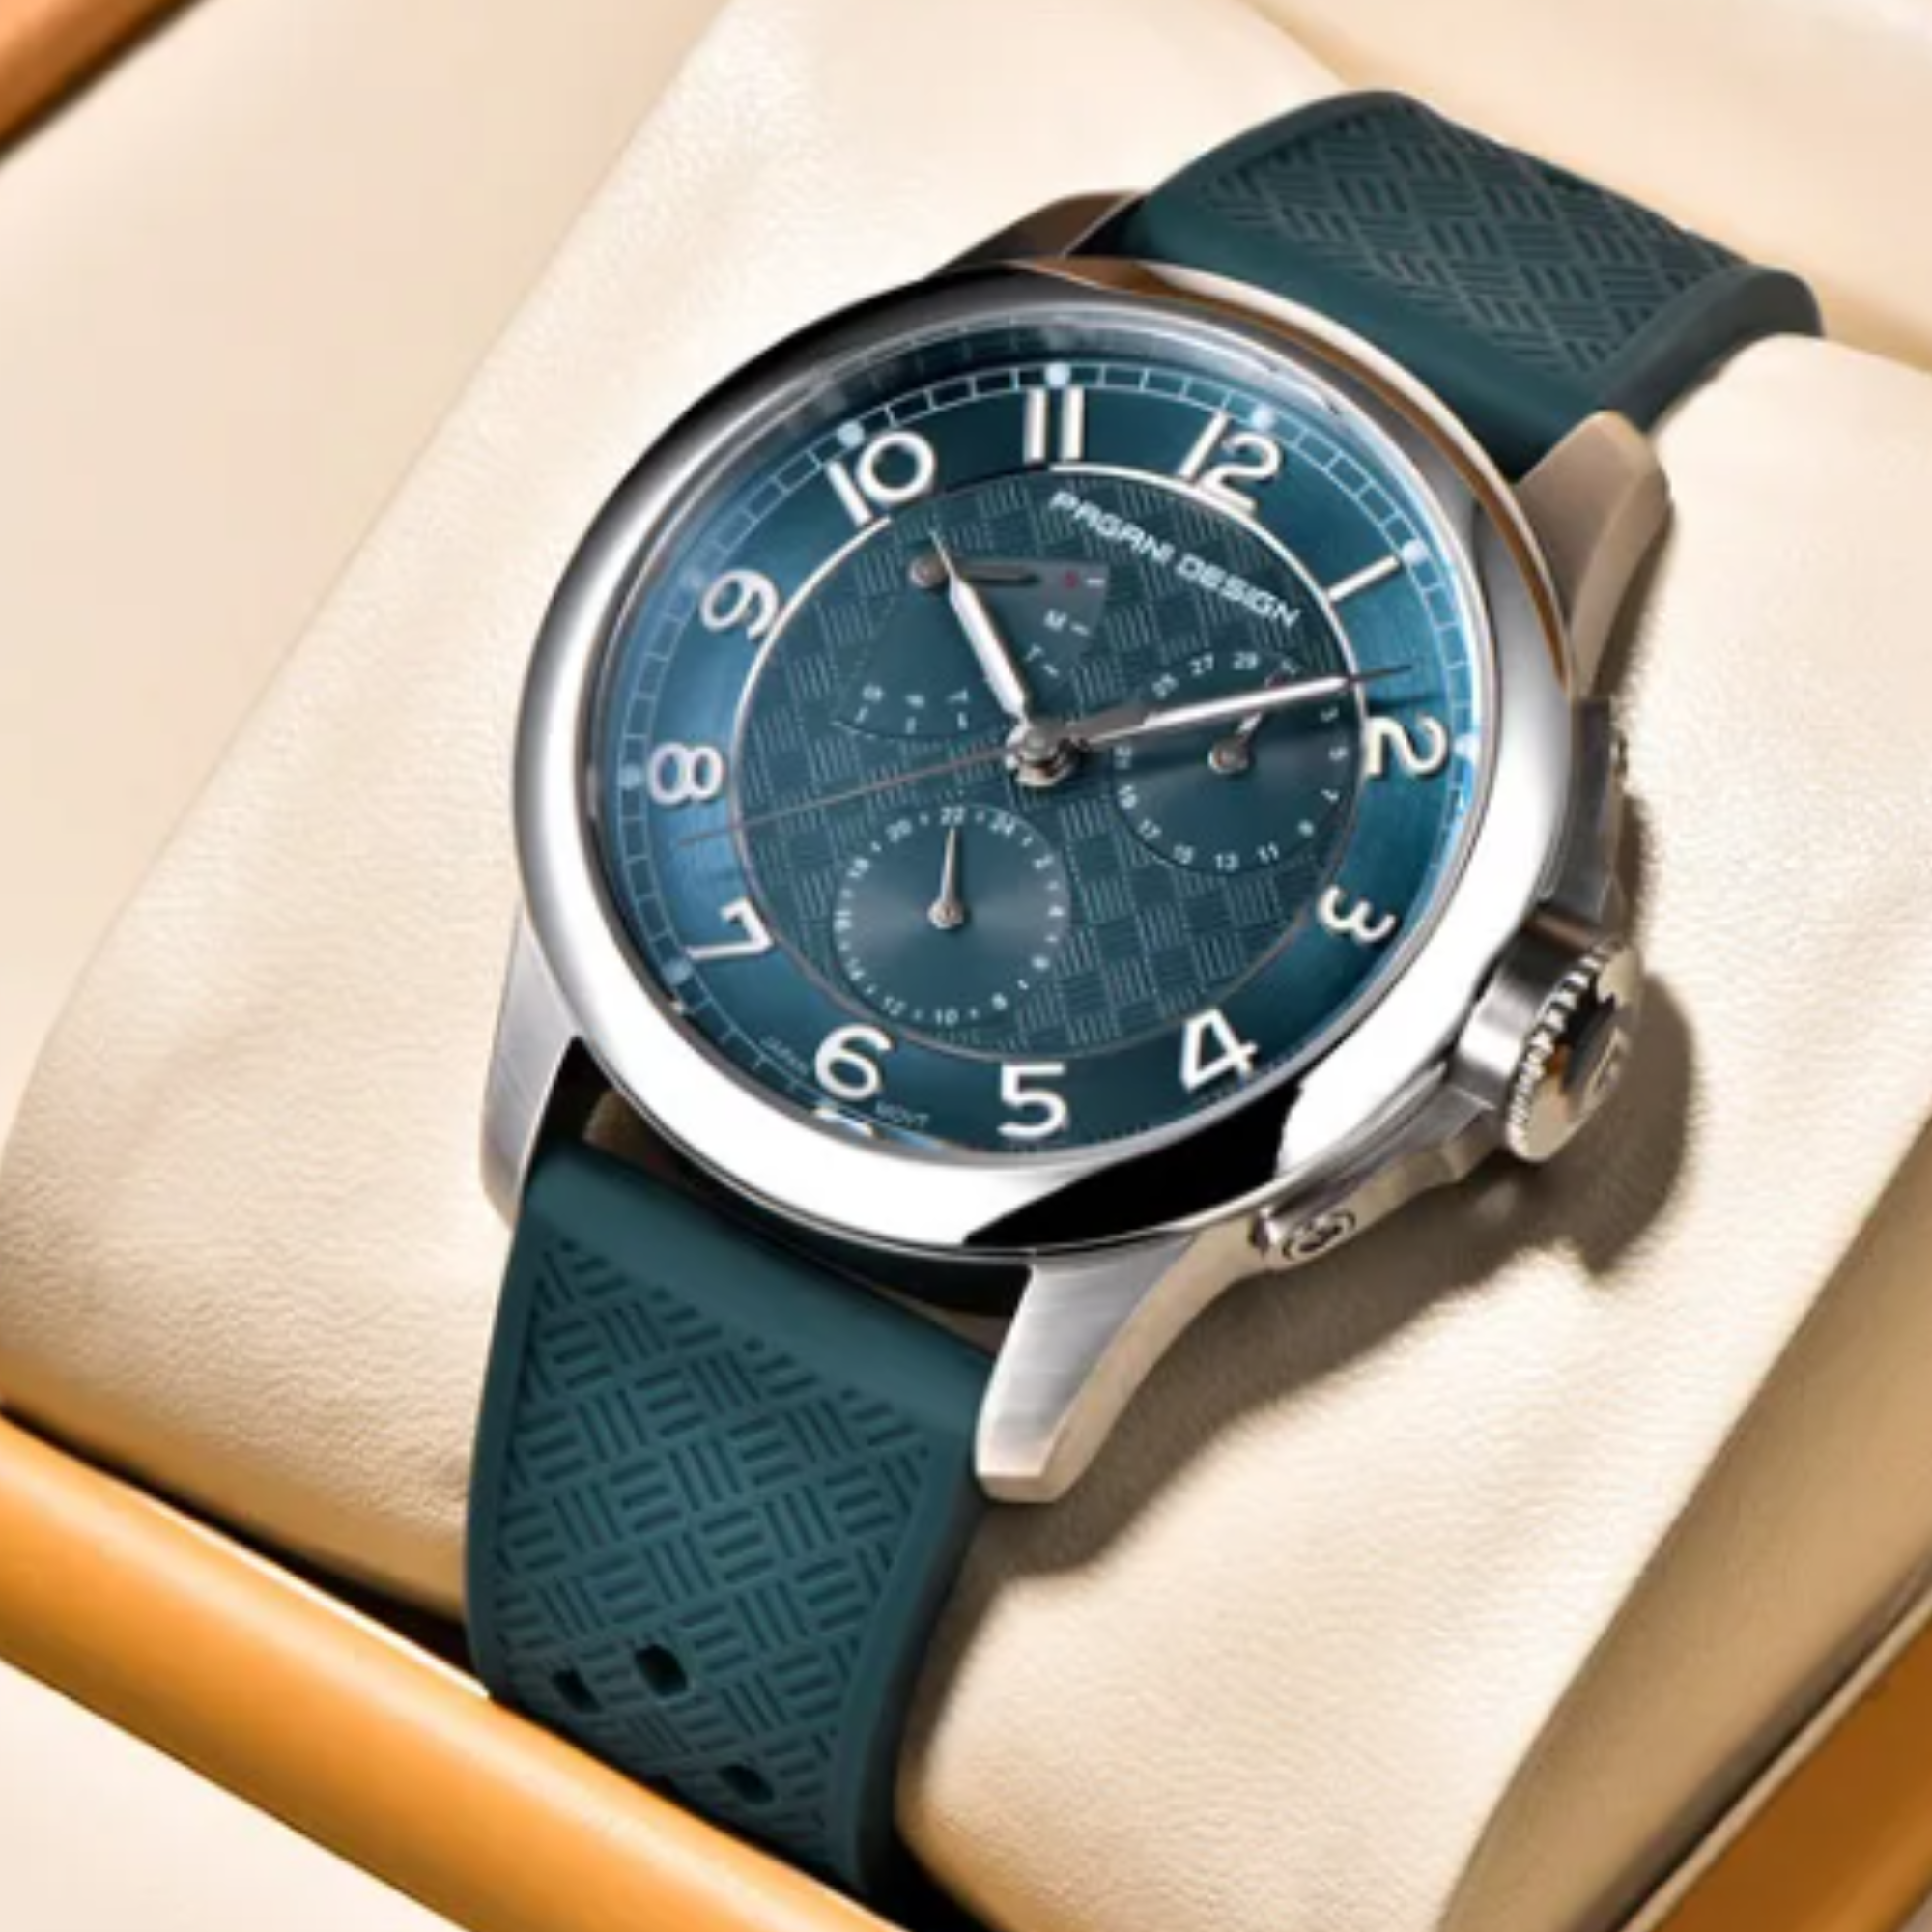 Pagani Design PD-1780 Japanese Quartz Movement Wristwatch with Sapphire Crystal Calendar New 24 Hours 100M Waterproof Watch - Sea Blue/Green Dial